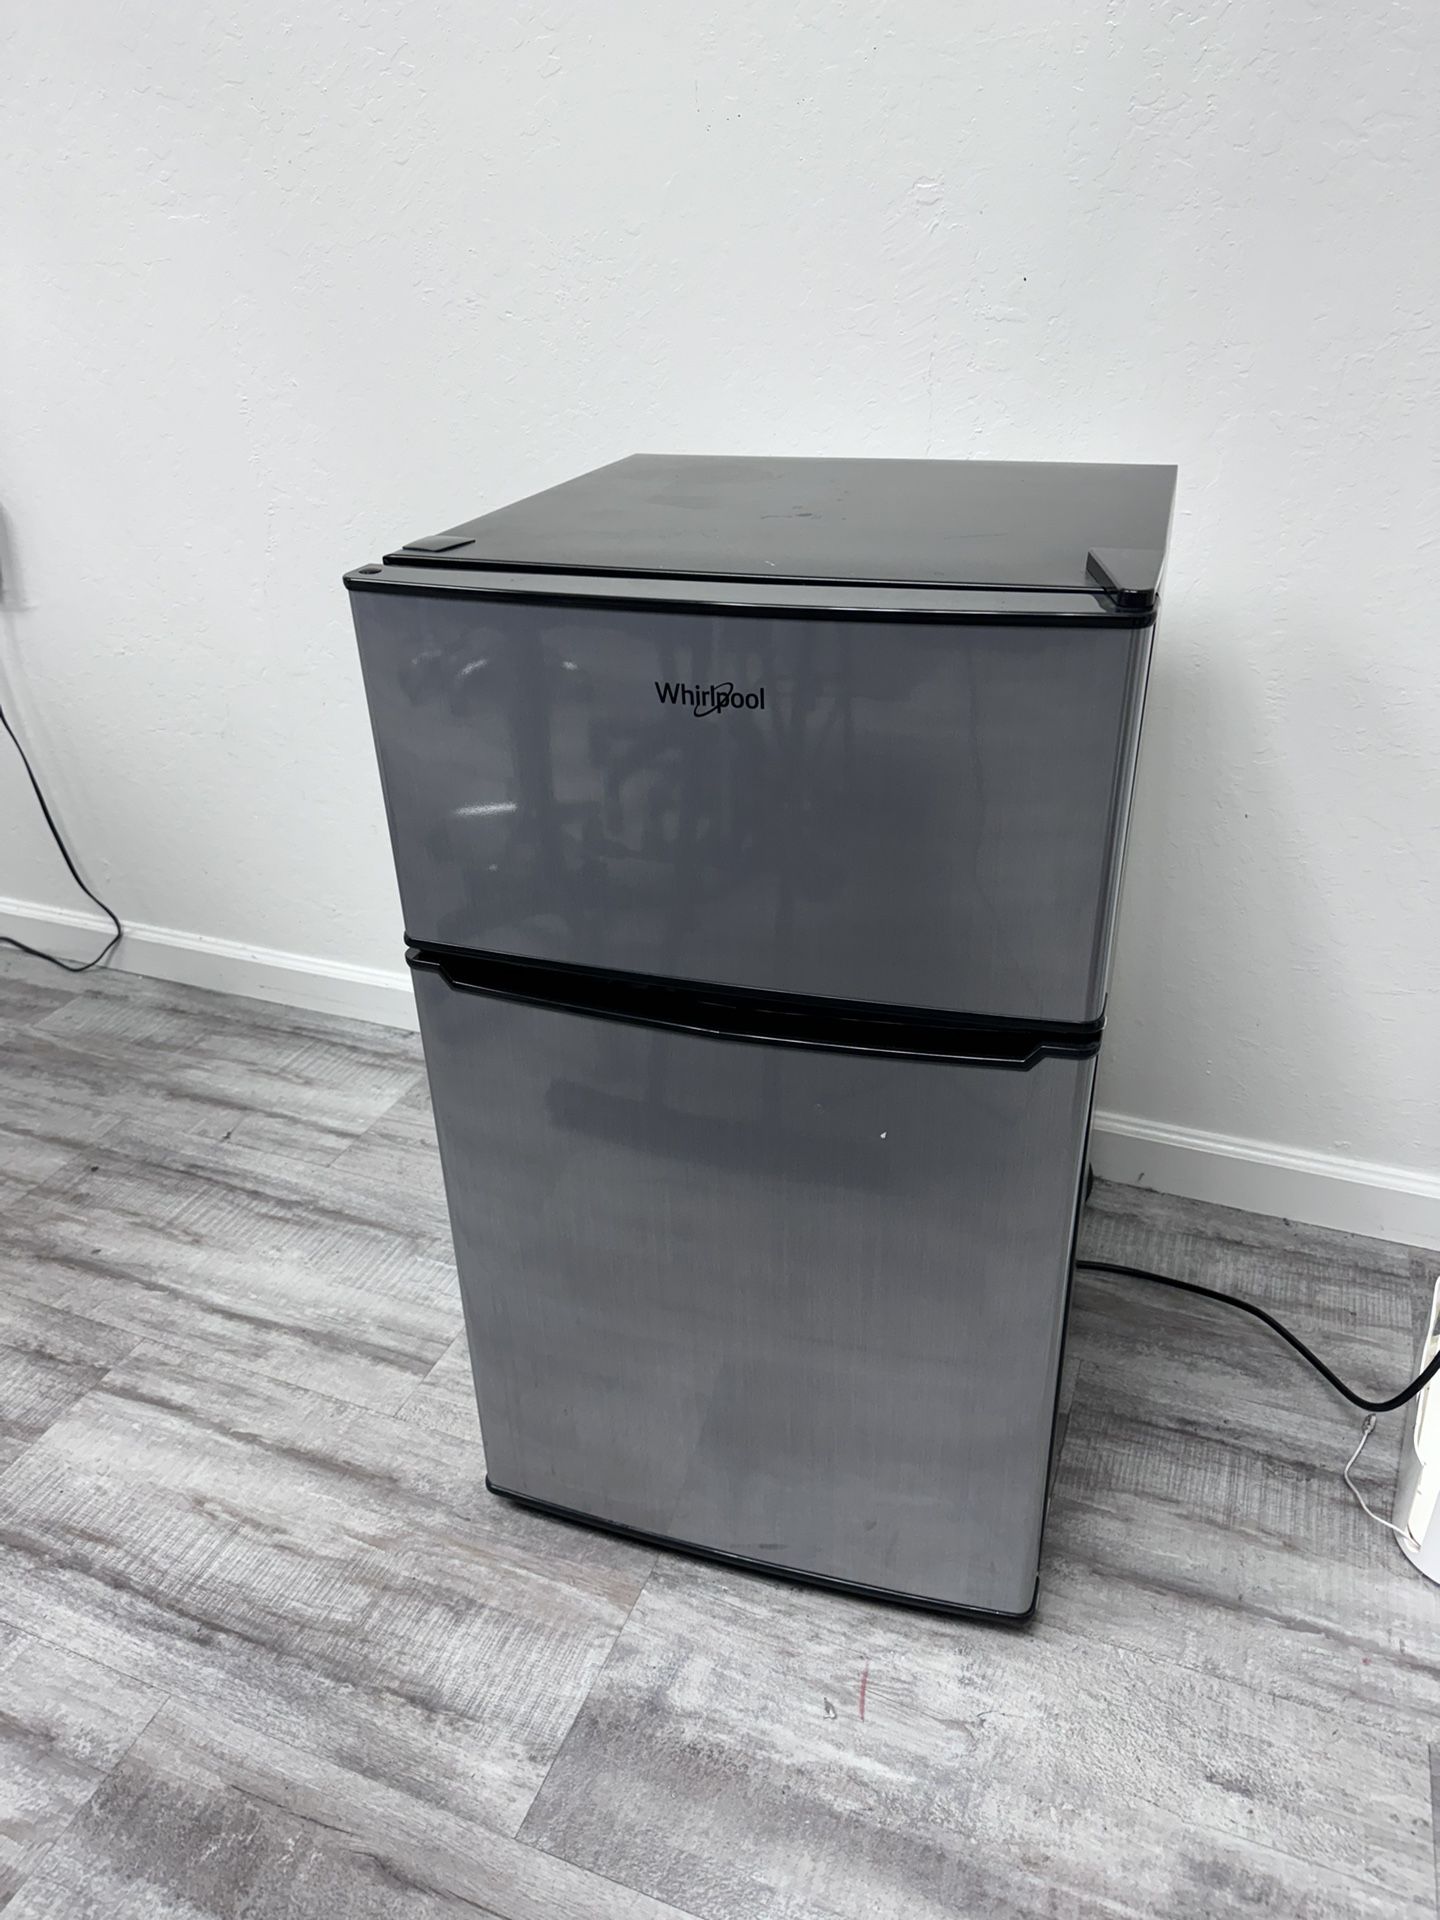 Whirlpool 3.1-cu.-ft. 2 Door Compact Refrigerator/Freezer Stainless $100 FIRM